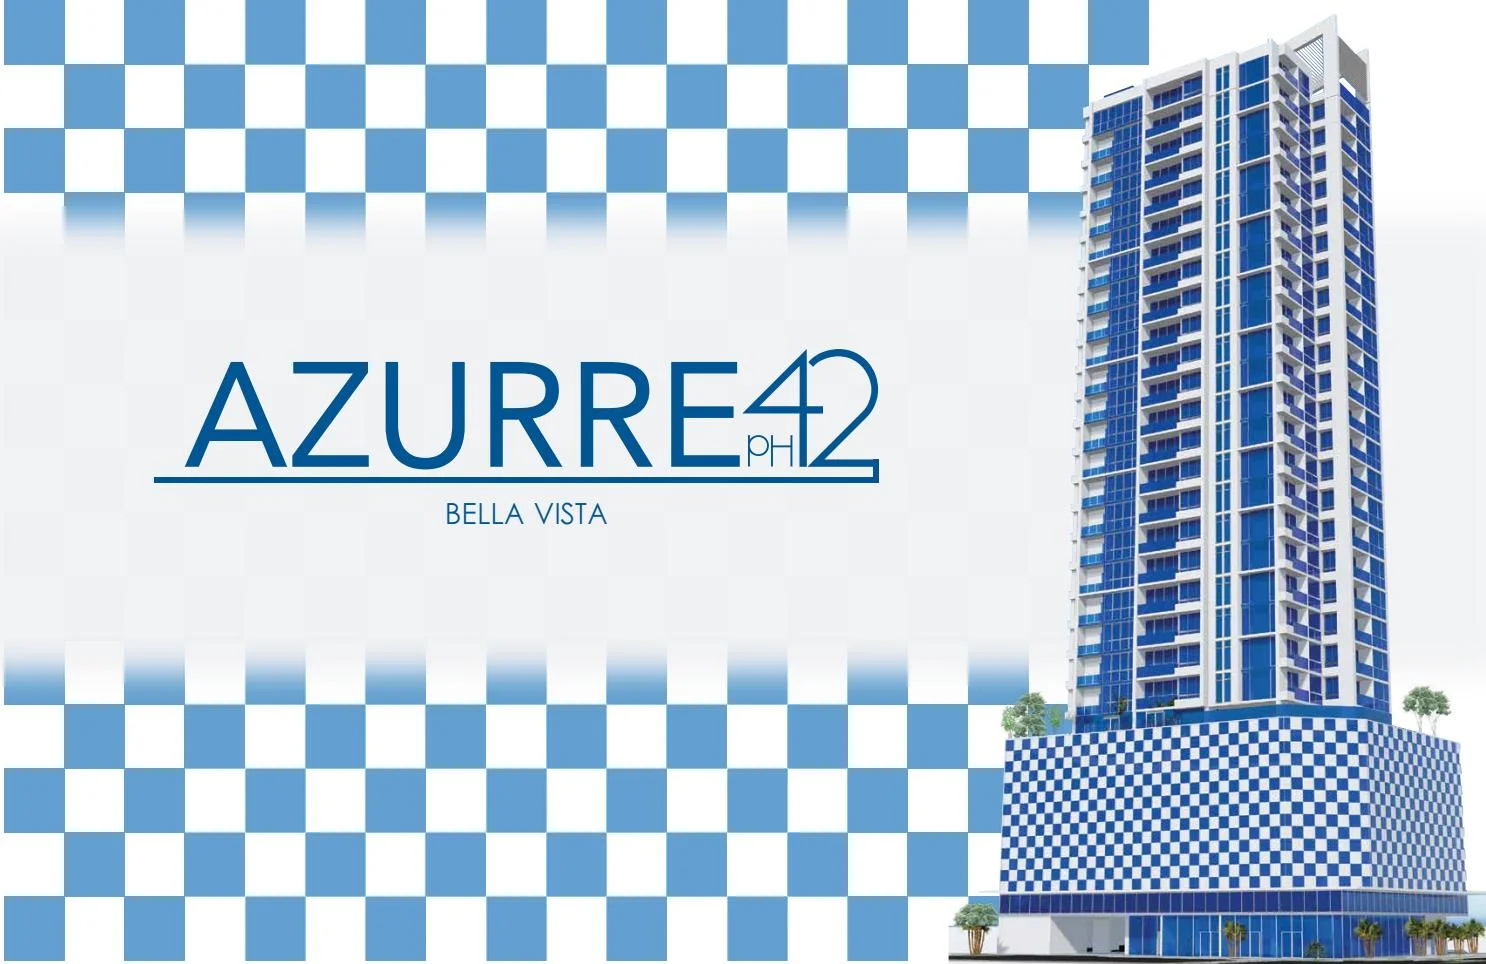 Azurre 42